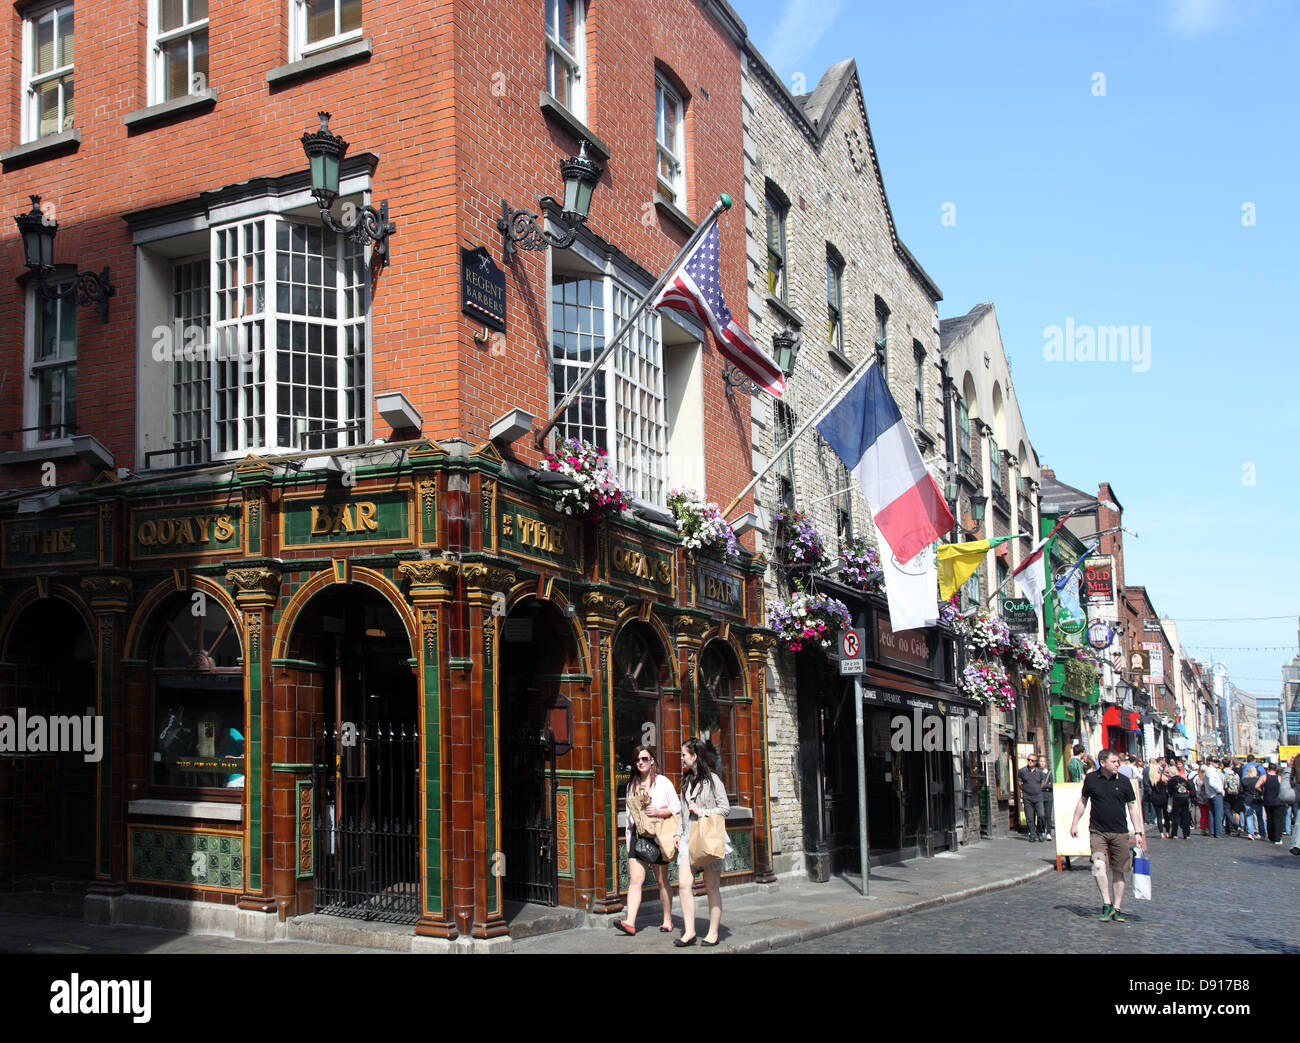 Kais Bar, Sommertag in Temple Bar, Dublin Rive Gauche Viertel, Irland Stockfoto